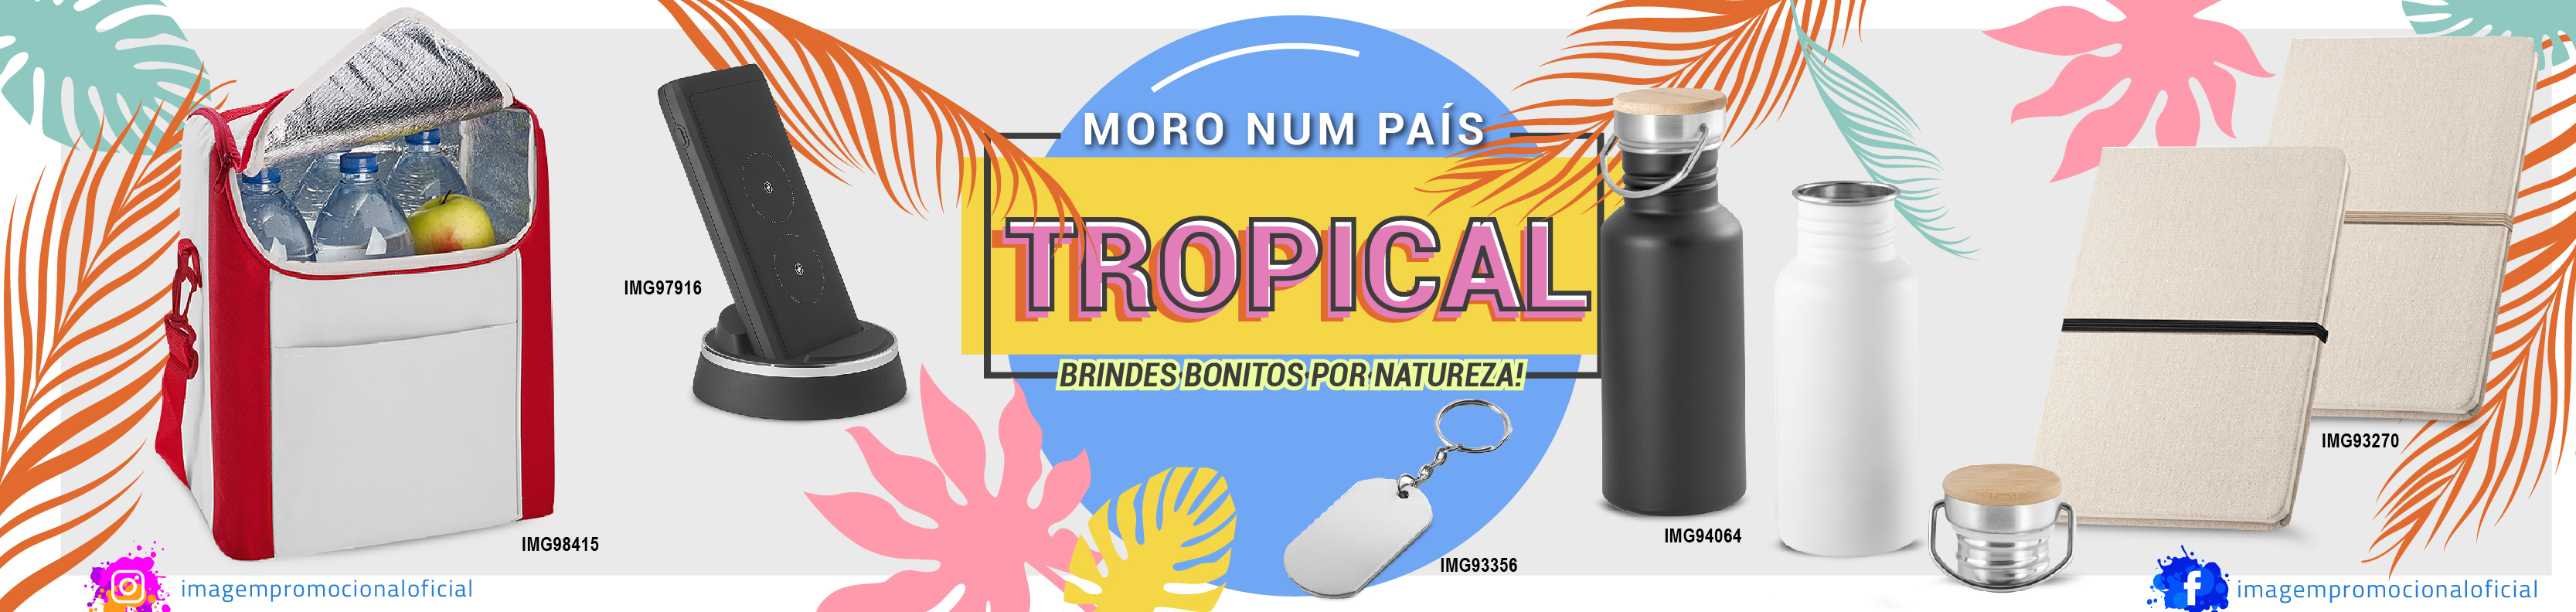 Banner Brindes tropicais